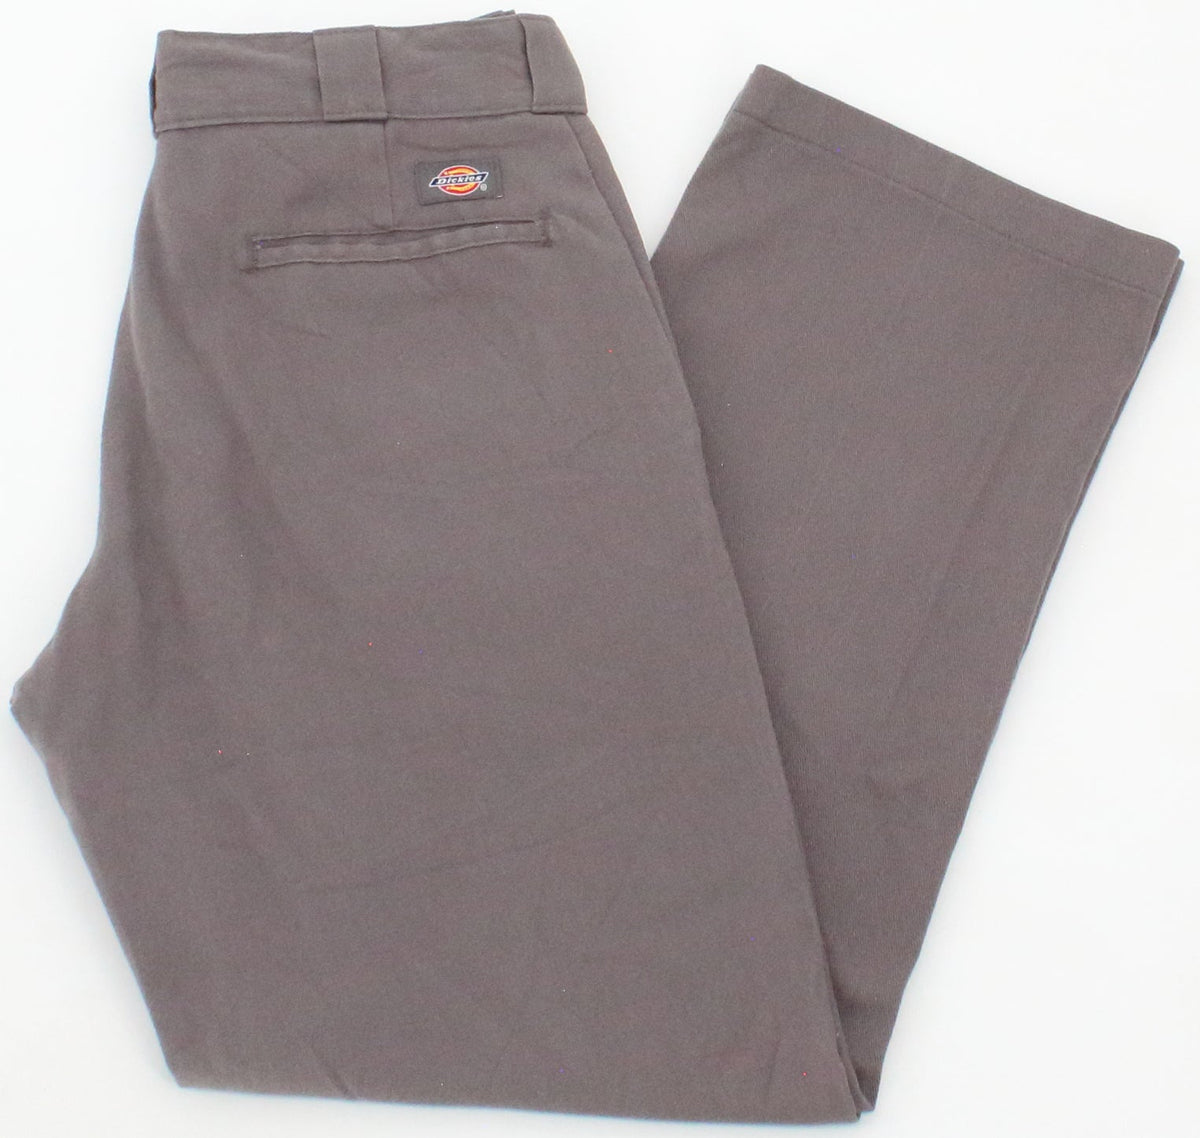 Dickies 874 Original Fit Flex Grey Pants